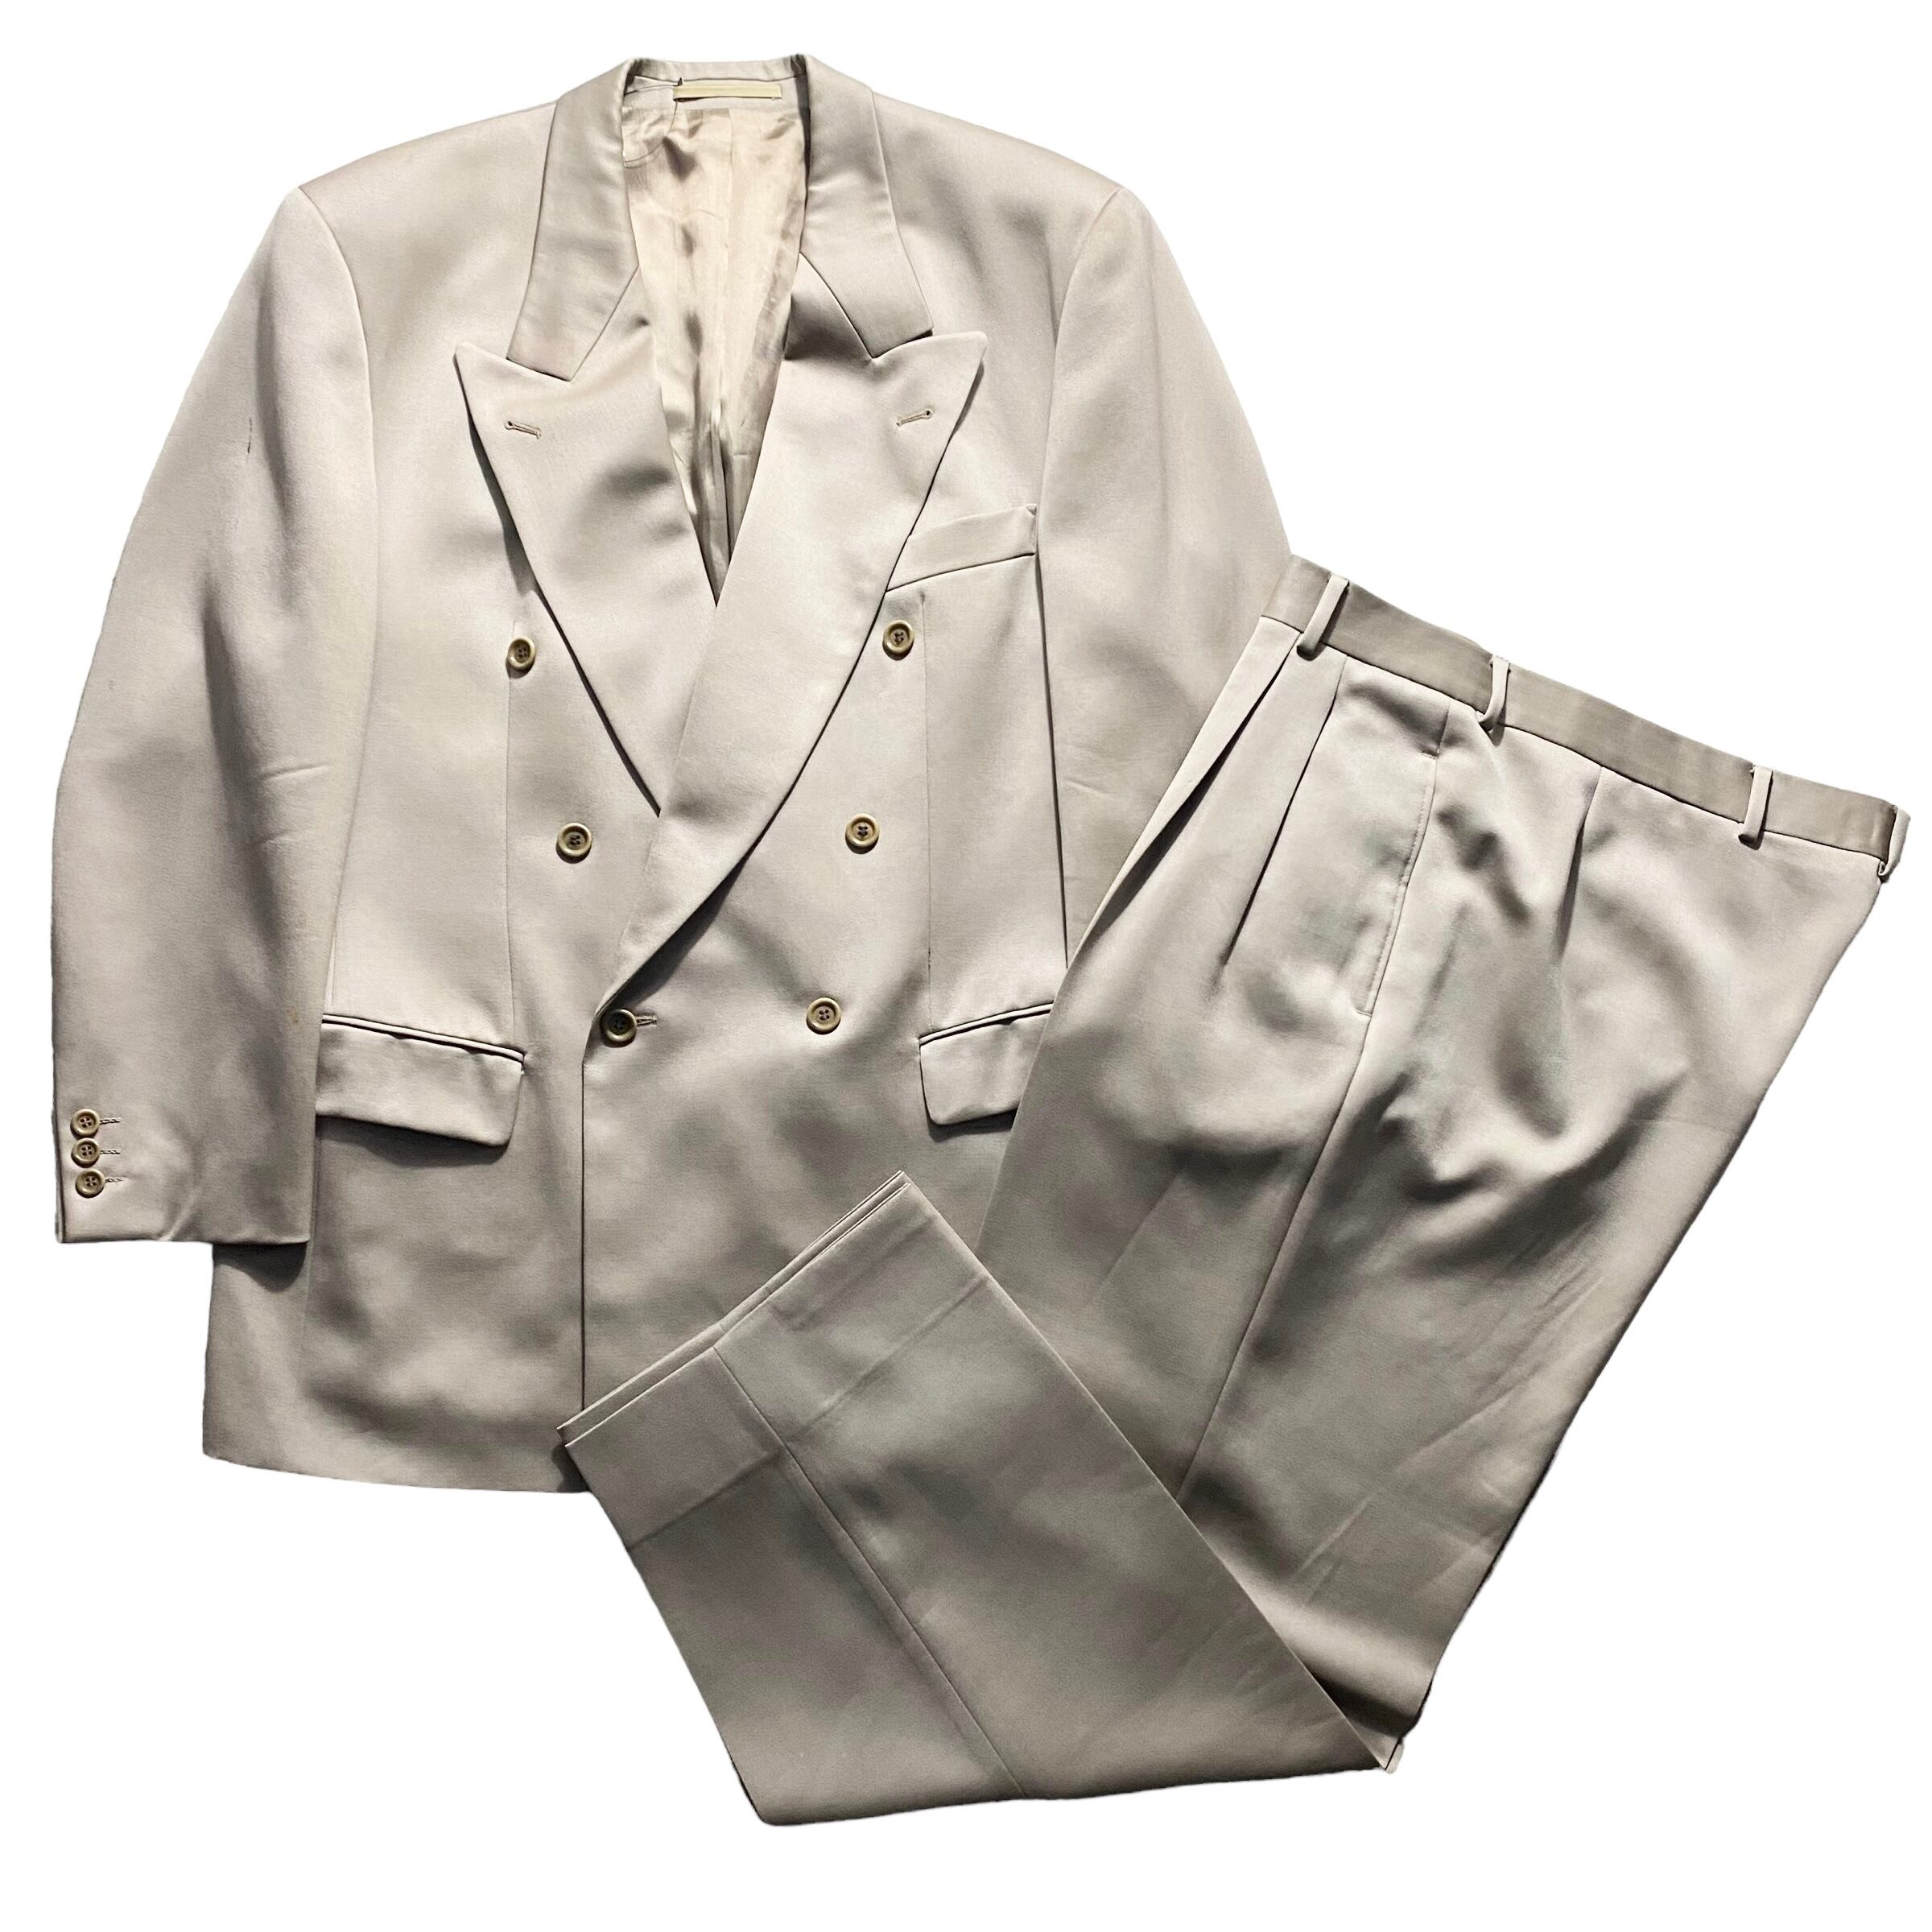 vintage HUGO BOSS double breasted suits set-up “AL CAPONE” | NOIR